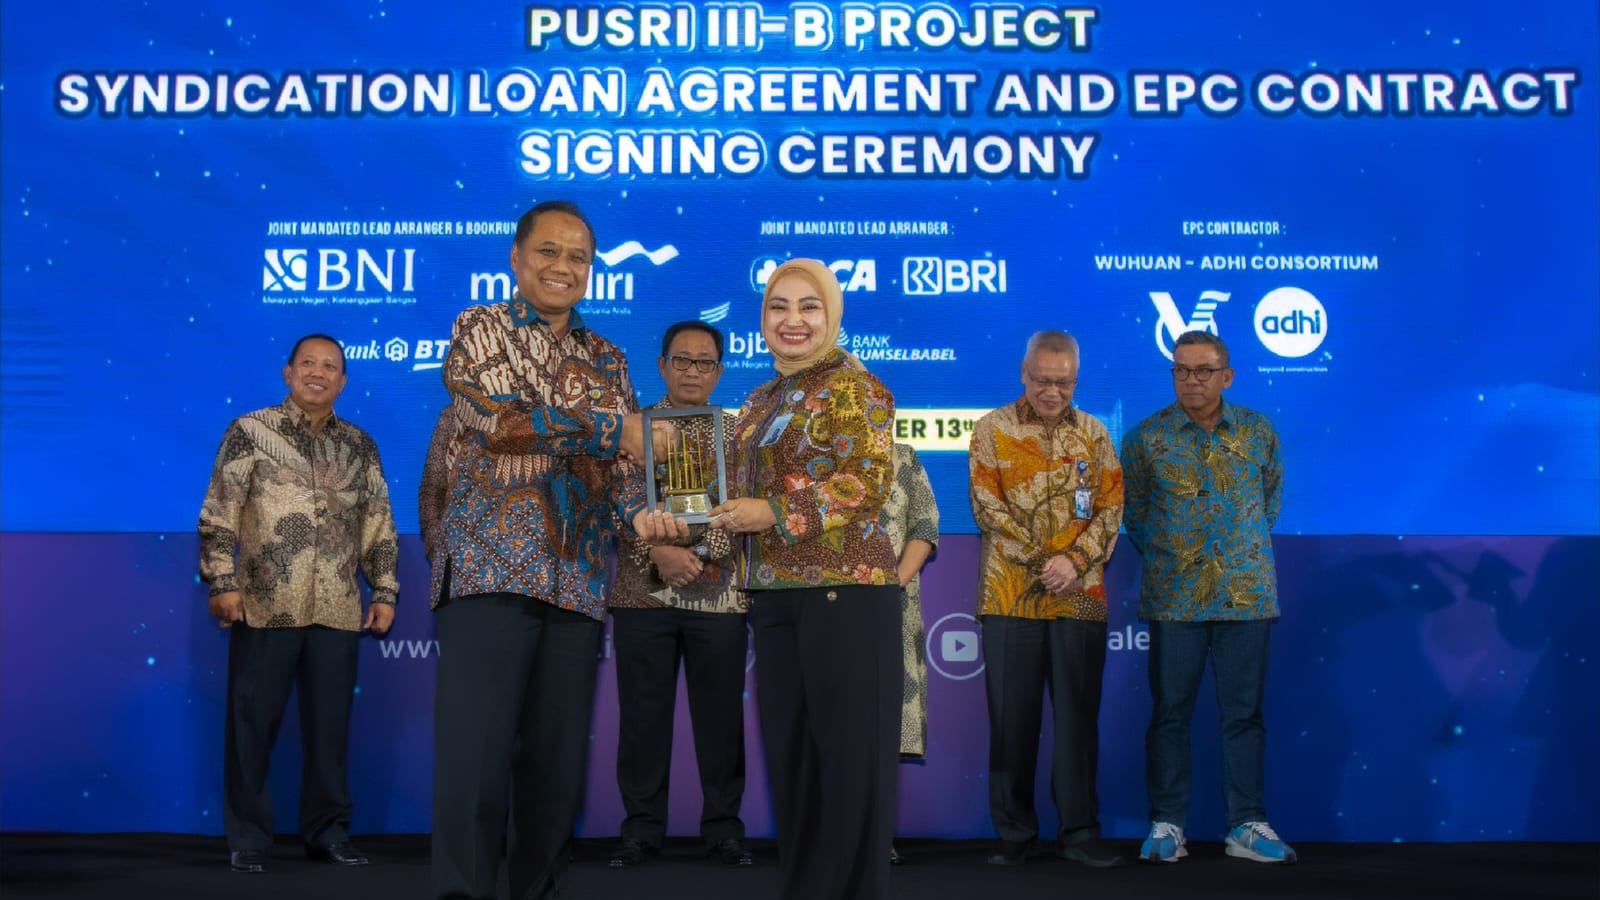 bank bjb melakukan penandatanganan Perjanjian Kredit Pendanaan Proyek Pabrik Pusri IIIB dengan PT Pusri Palembang